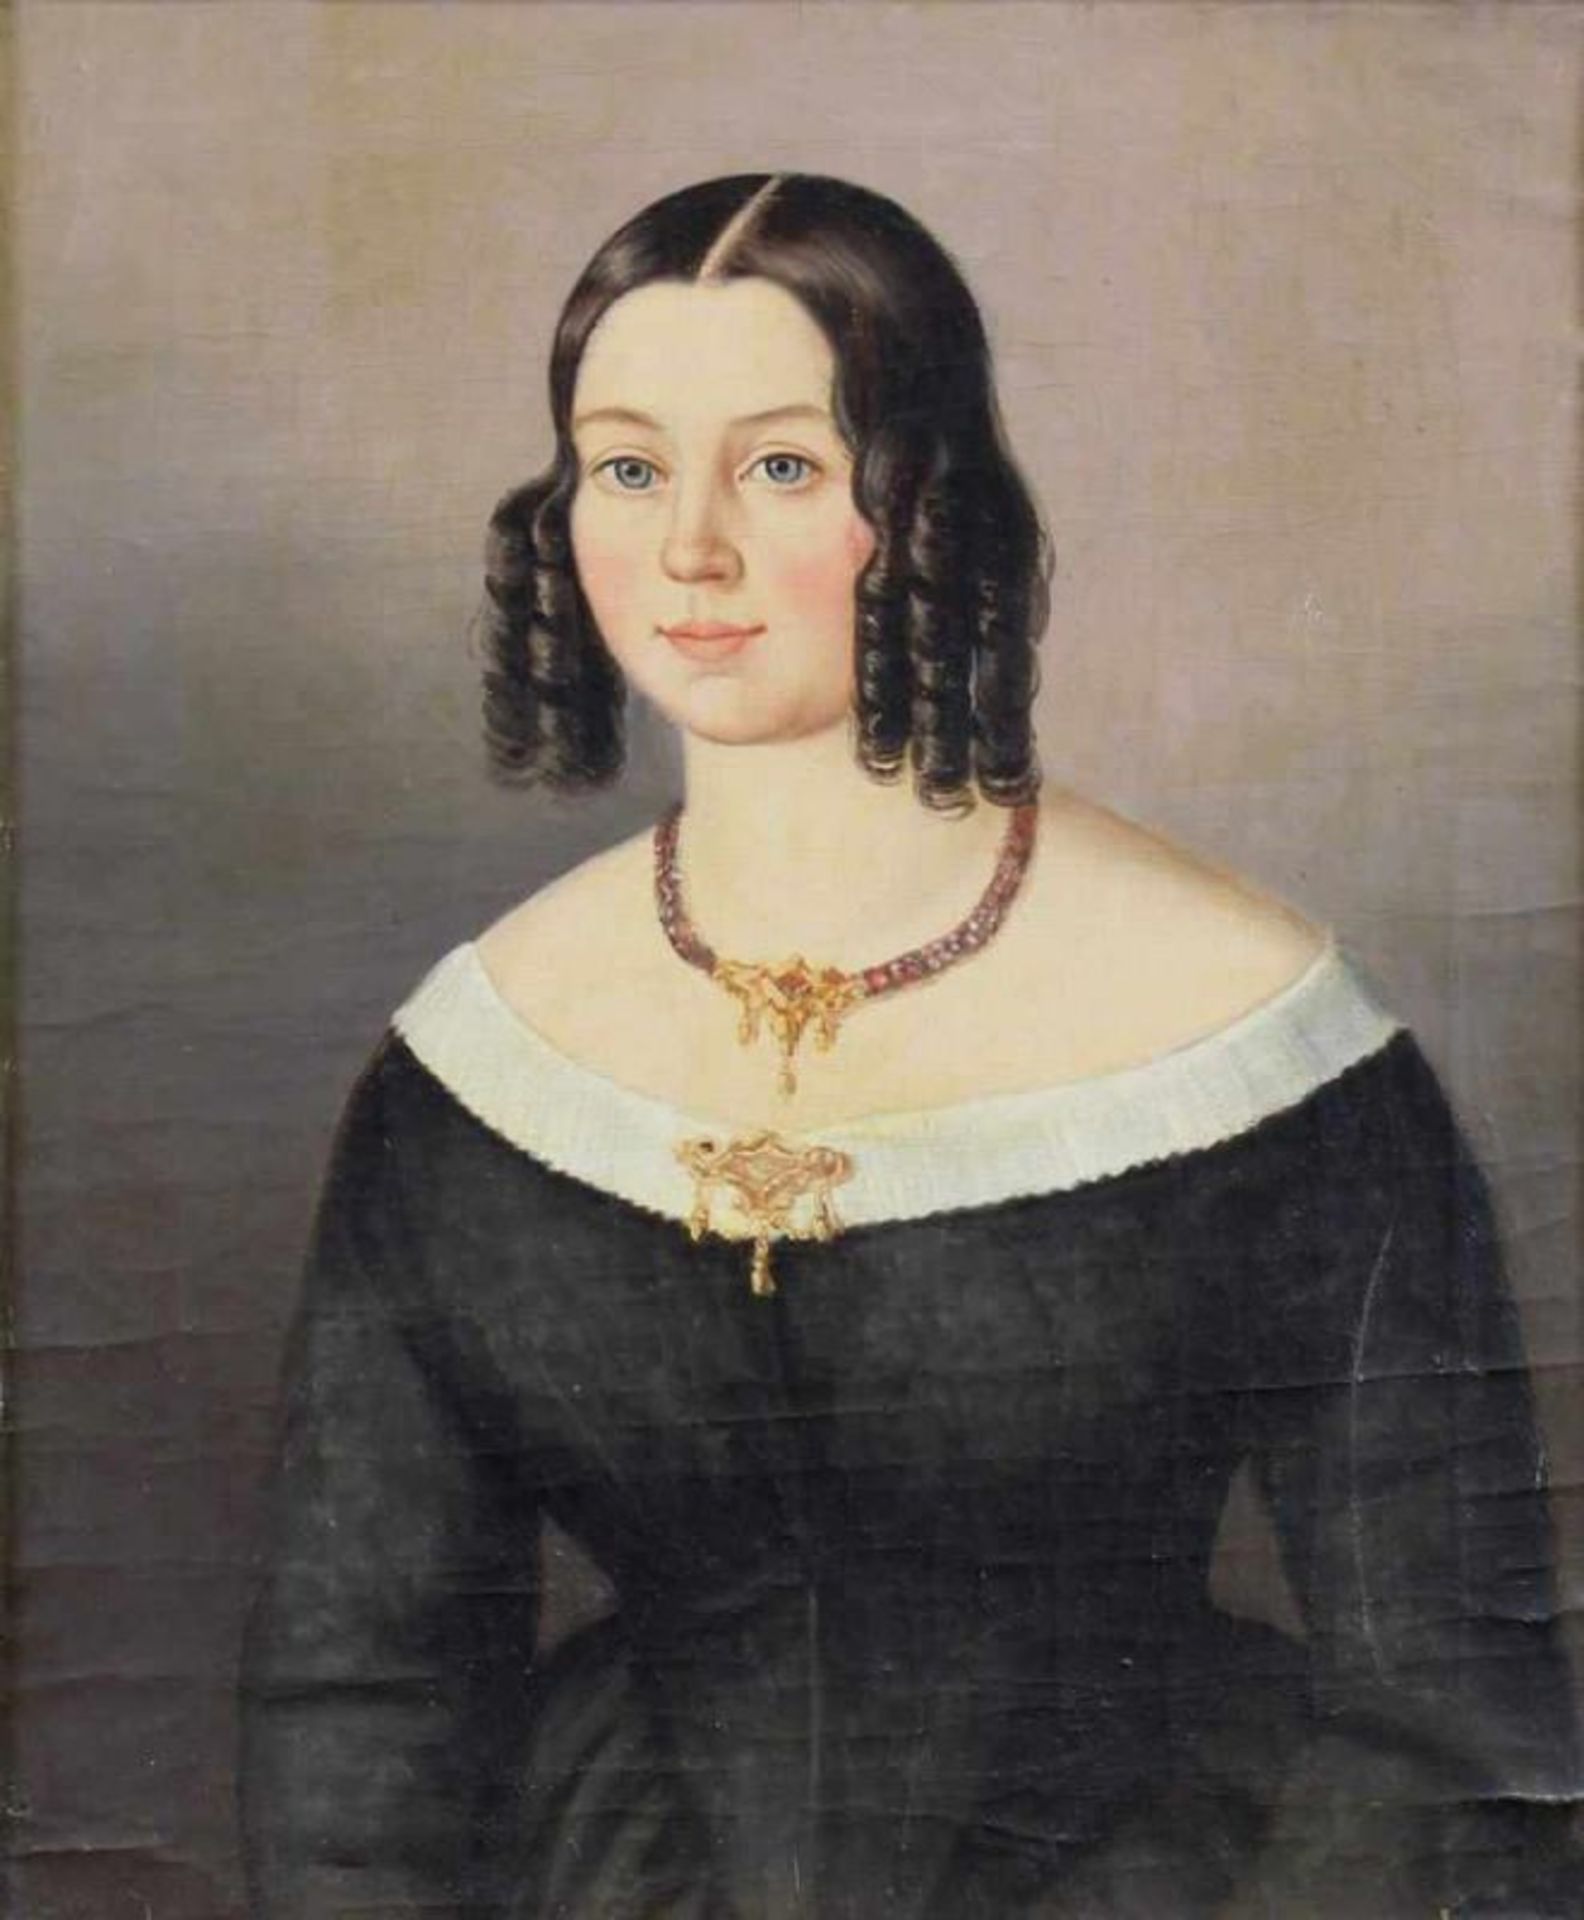 Porträtmaler (19. Jh.), "Bildnis einer jungen Frau", Öl auf Leinwand, 40 x 32 cm, alter Rahmen